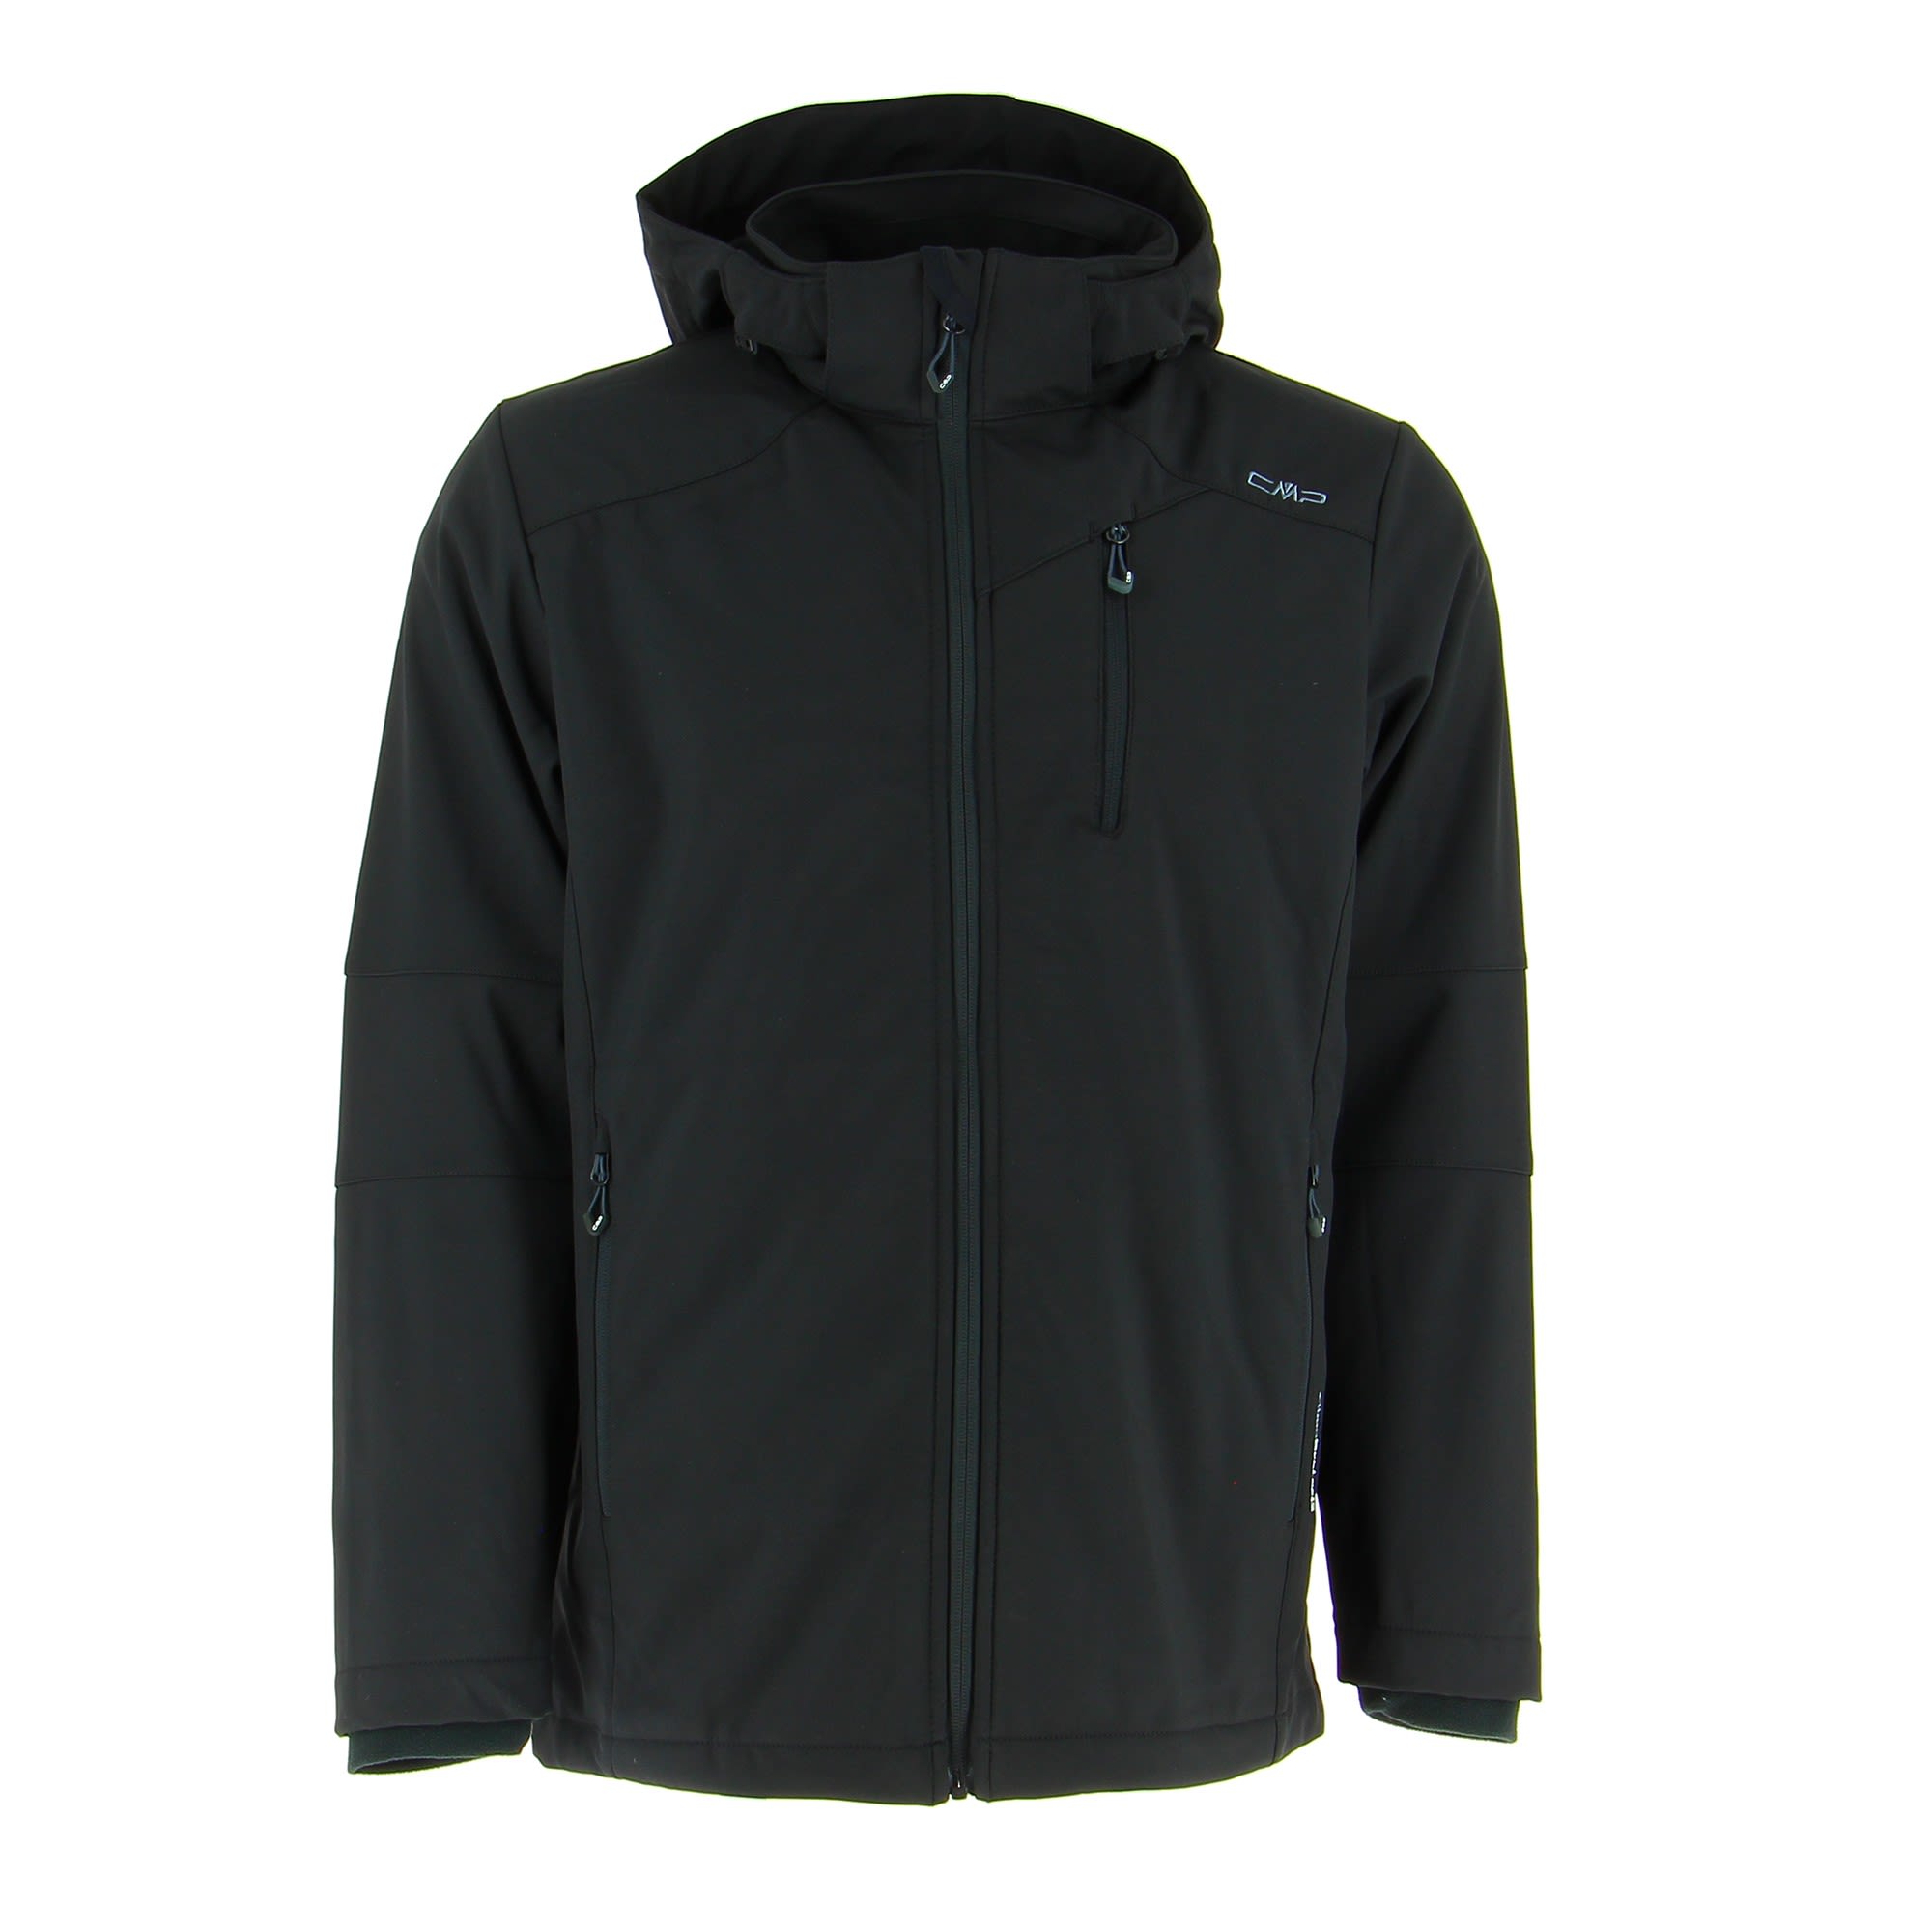 CMP Jacket Zip Hood Softshell Comfort FIt Long Male Softshelljacken- Grsse 60 - Farbe Nero unter CMP